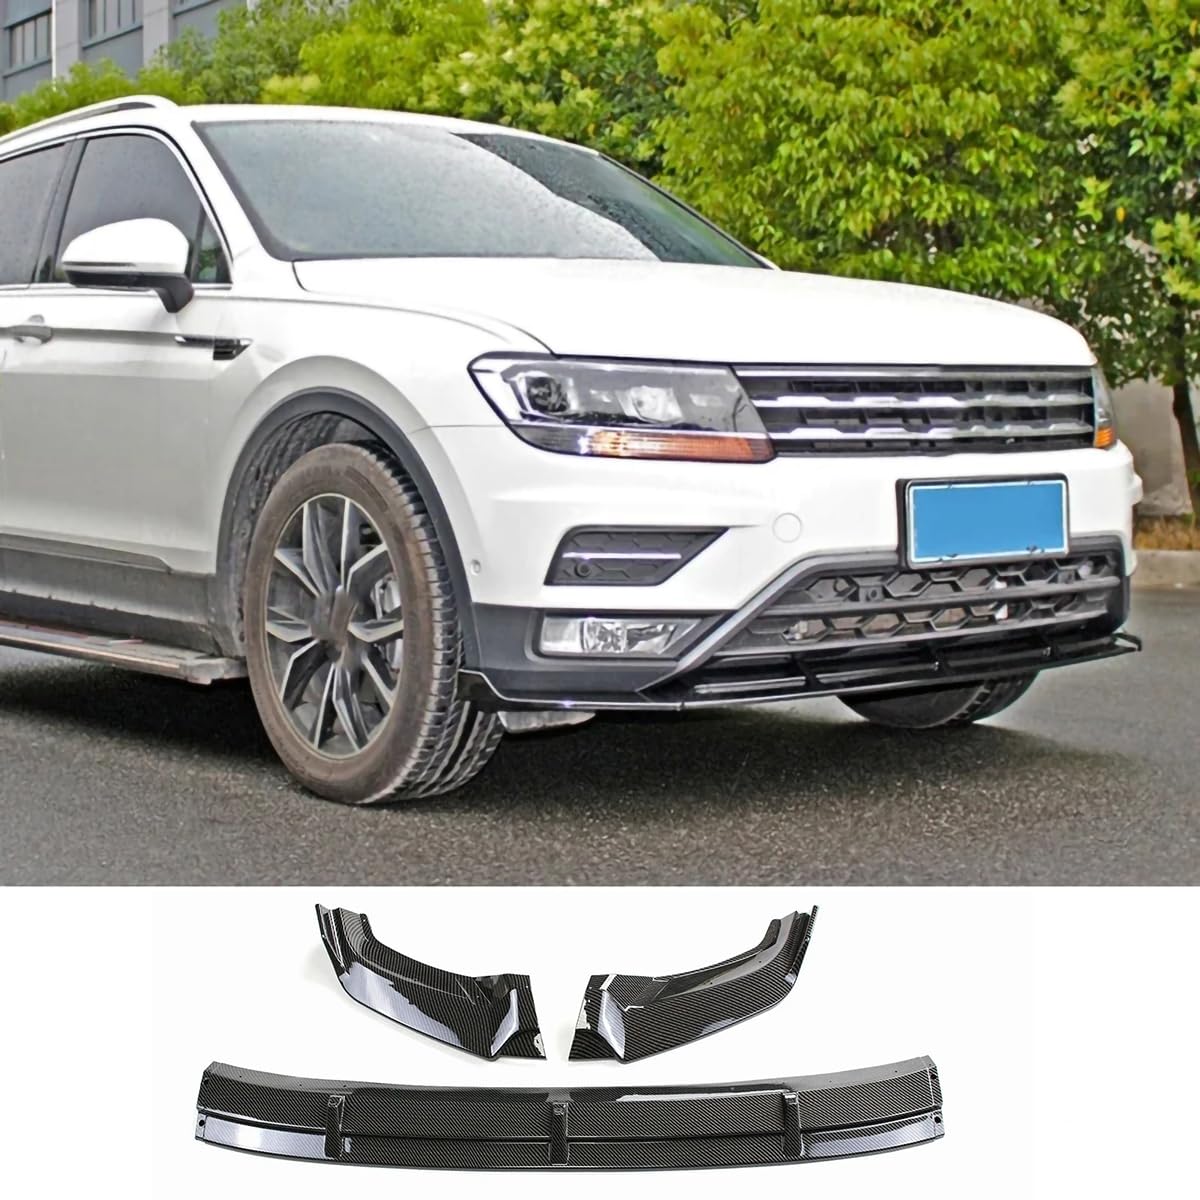 Auto-Frontstoßstangen-Lippenspoiler-Splitter für VW Tiguan 2017-2020, Frontschaufel-Bodykit-Spoiler,C-Carbon surface von Spulhc